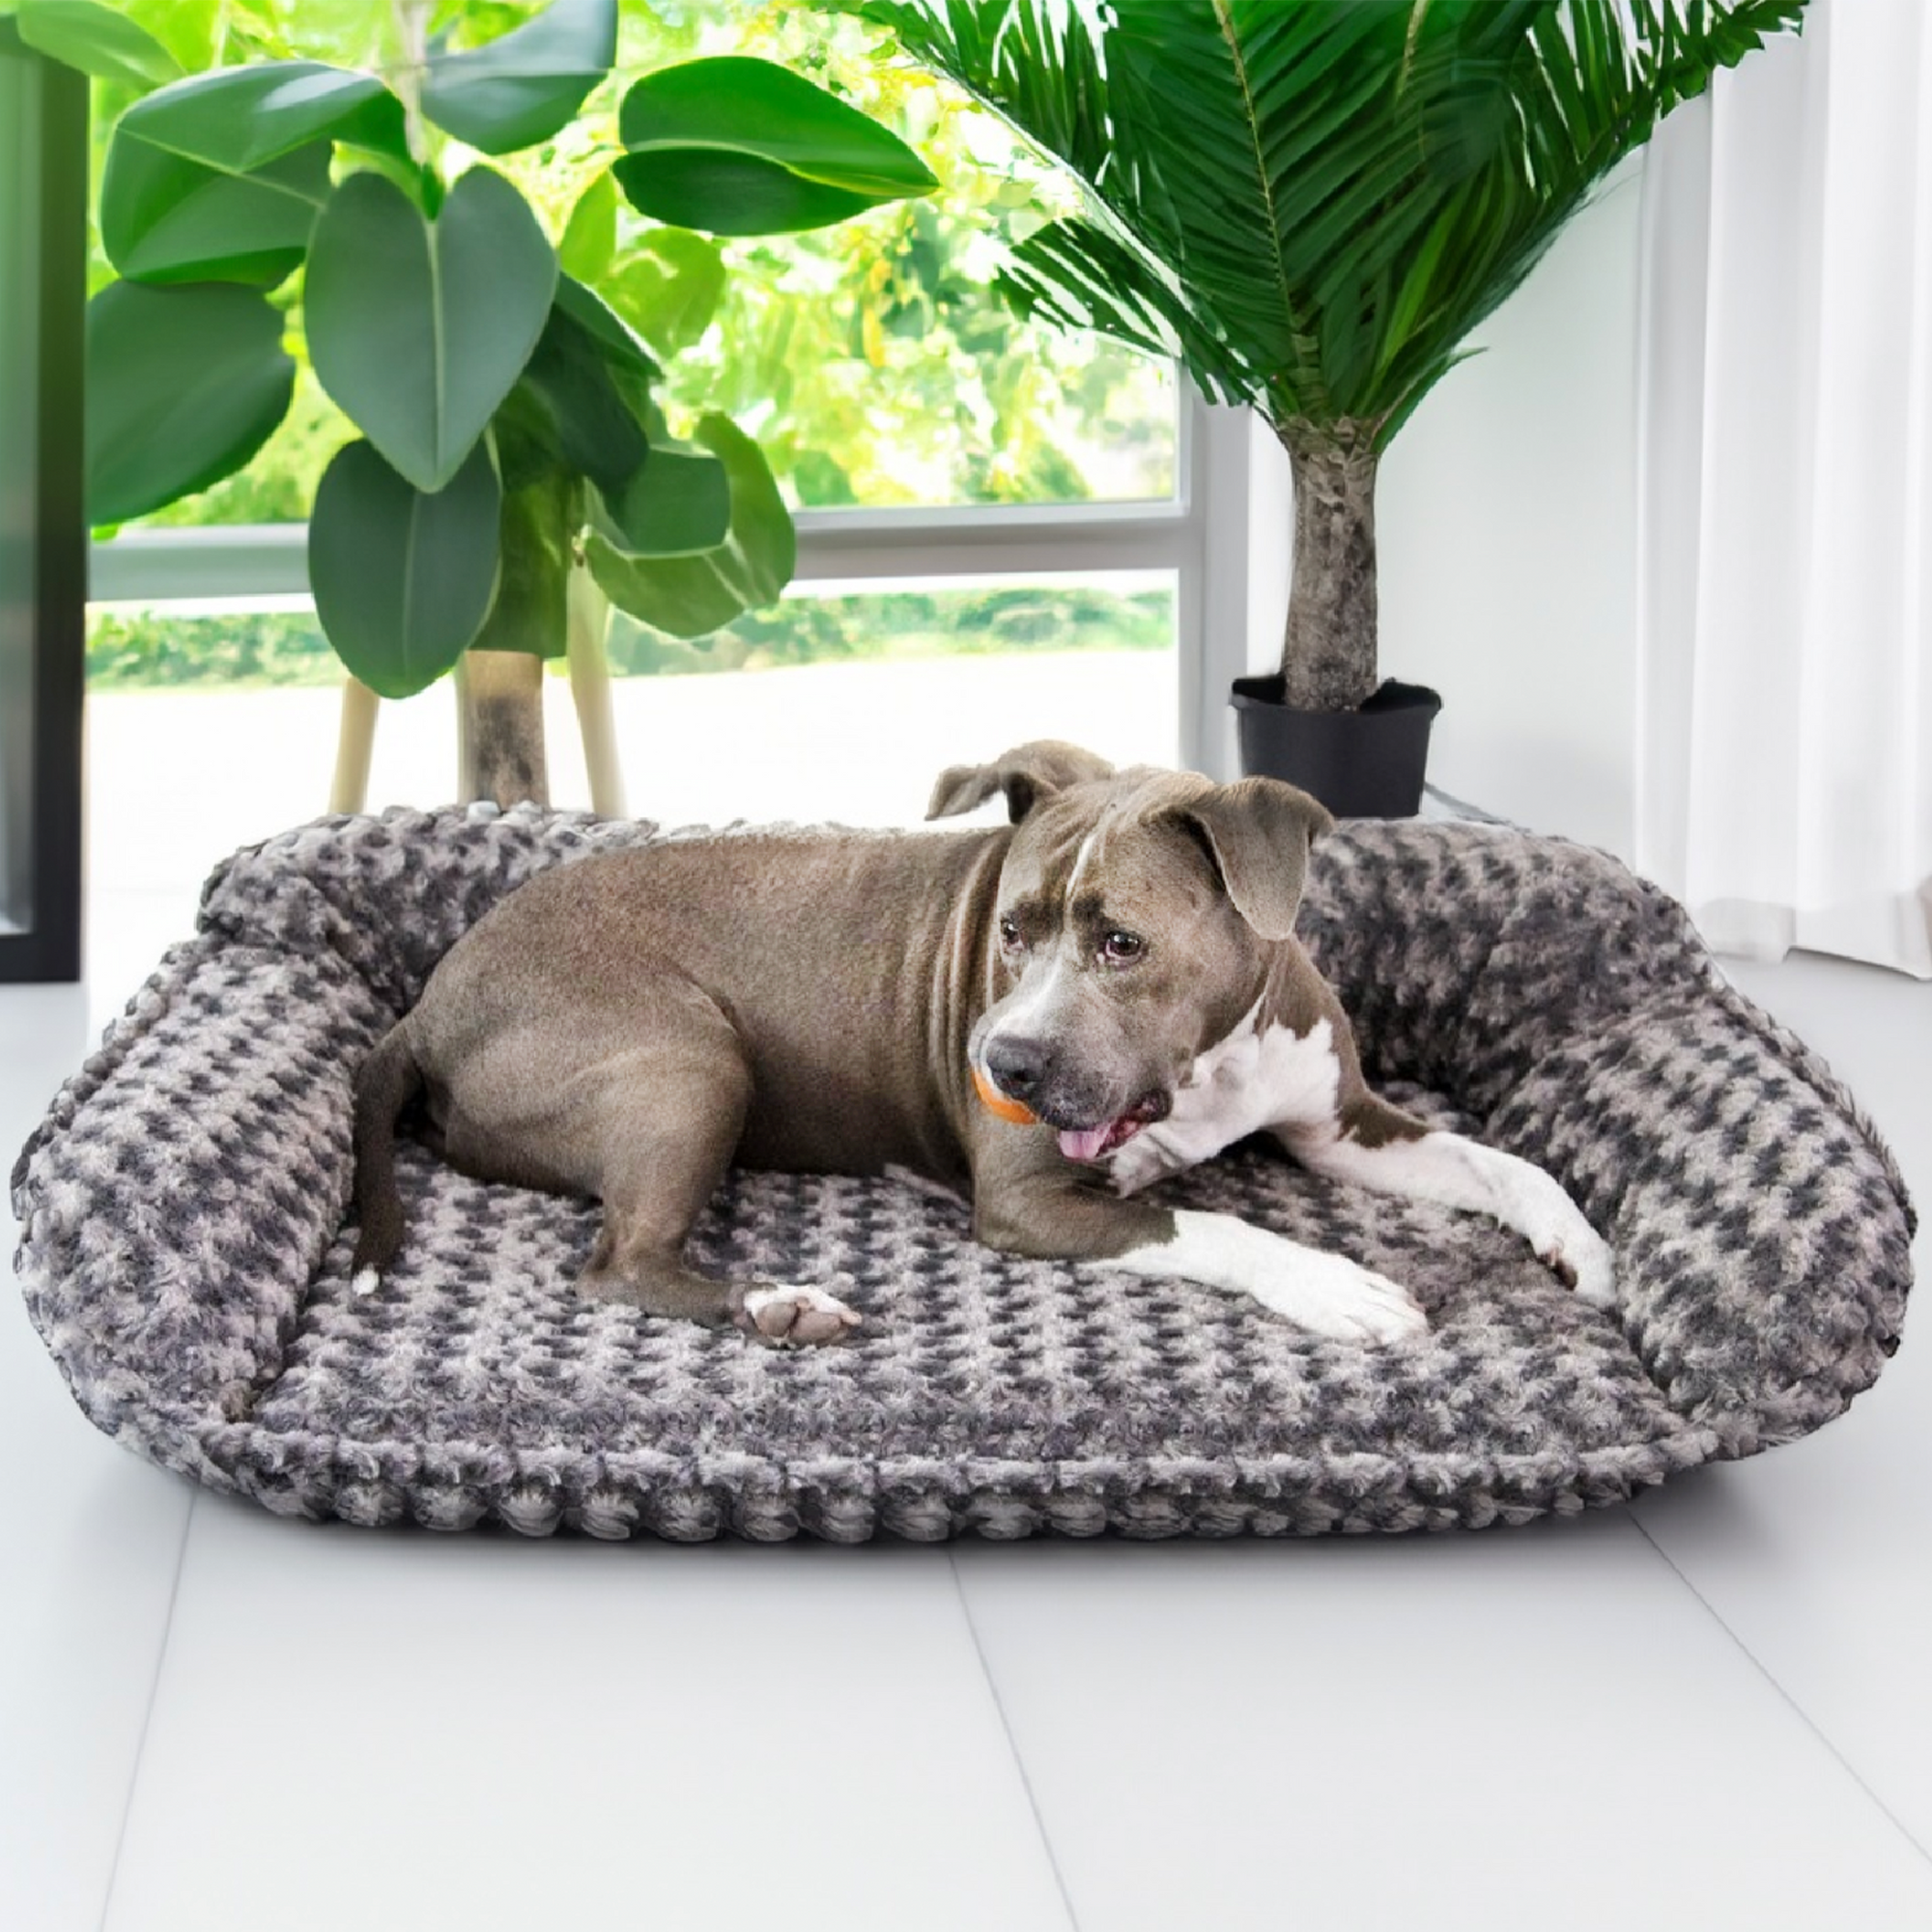 Animals Matter Luxury Outdoor Futon Beach / Medium | Premium Pet Supplies for Dogs & Puppies